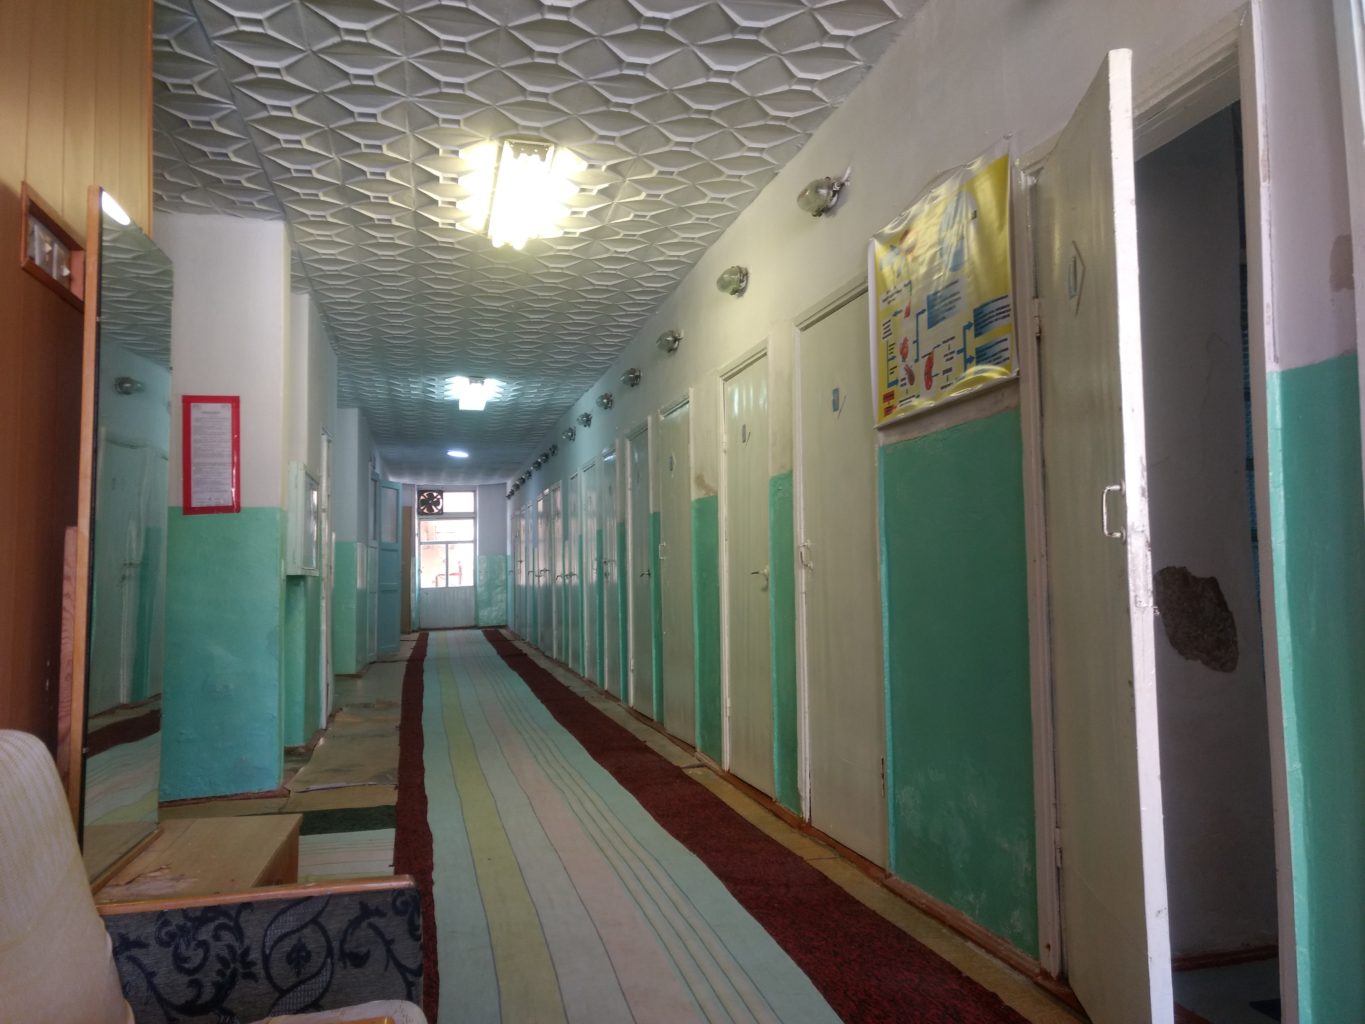 Radon bath treatment rooms at Jeti-Oguz sanatorium